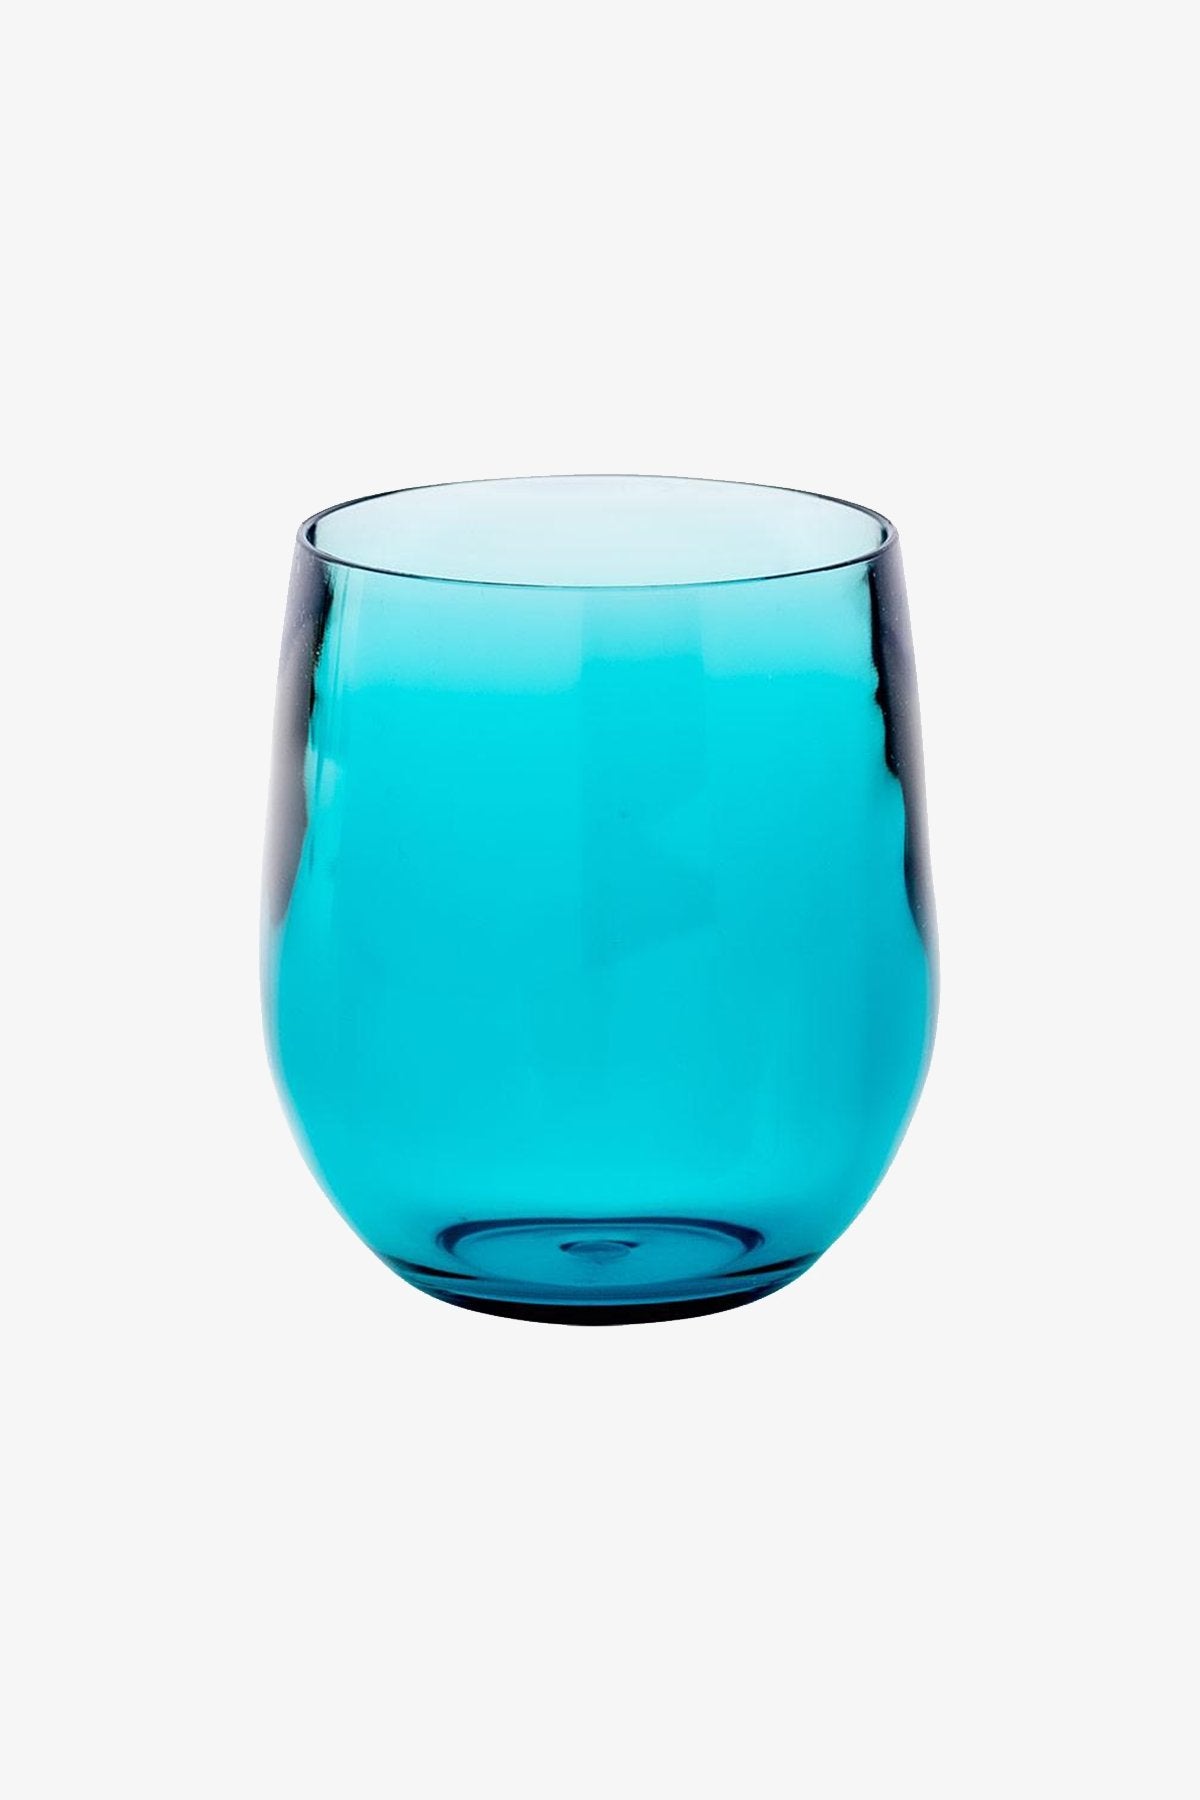 Acrylic 12oz Tumbler Glass in Turquoise - shop-olivia.com